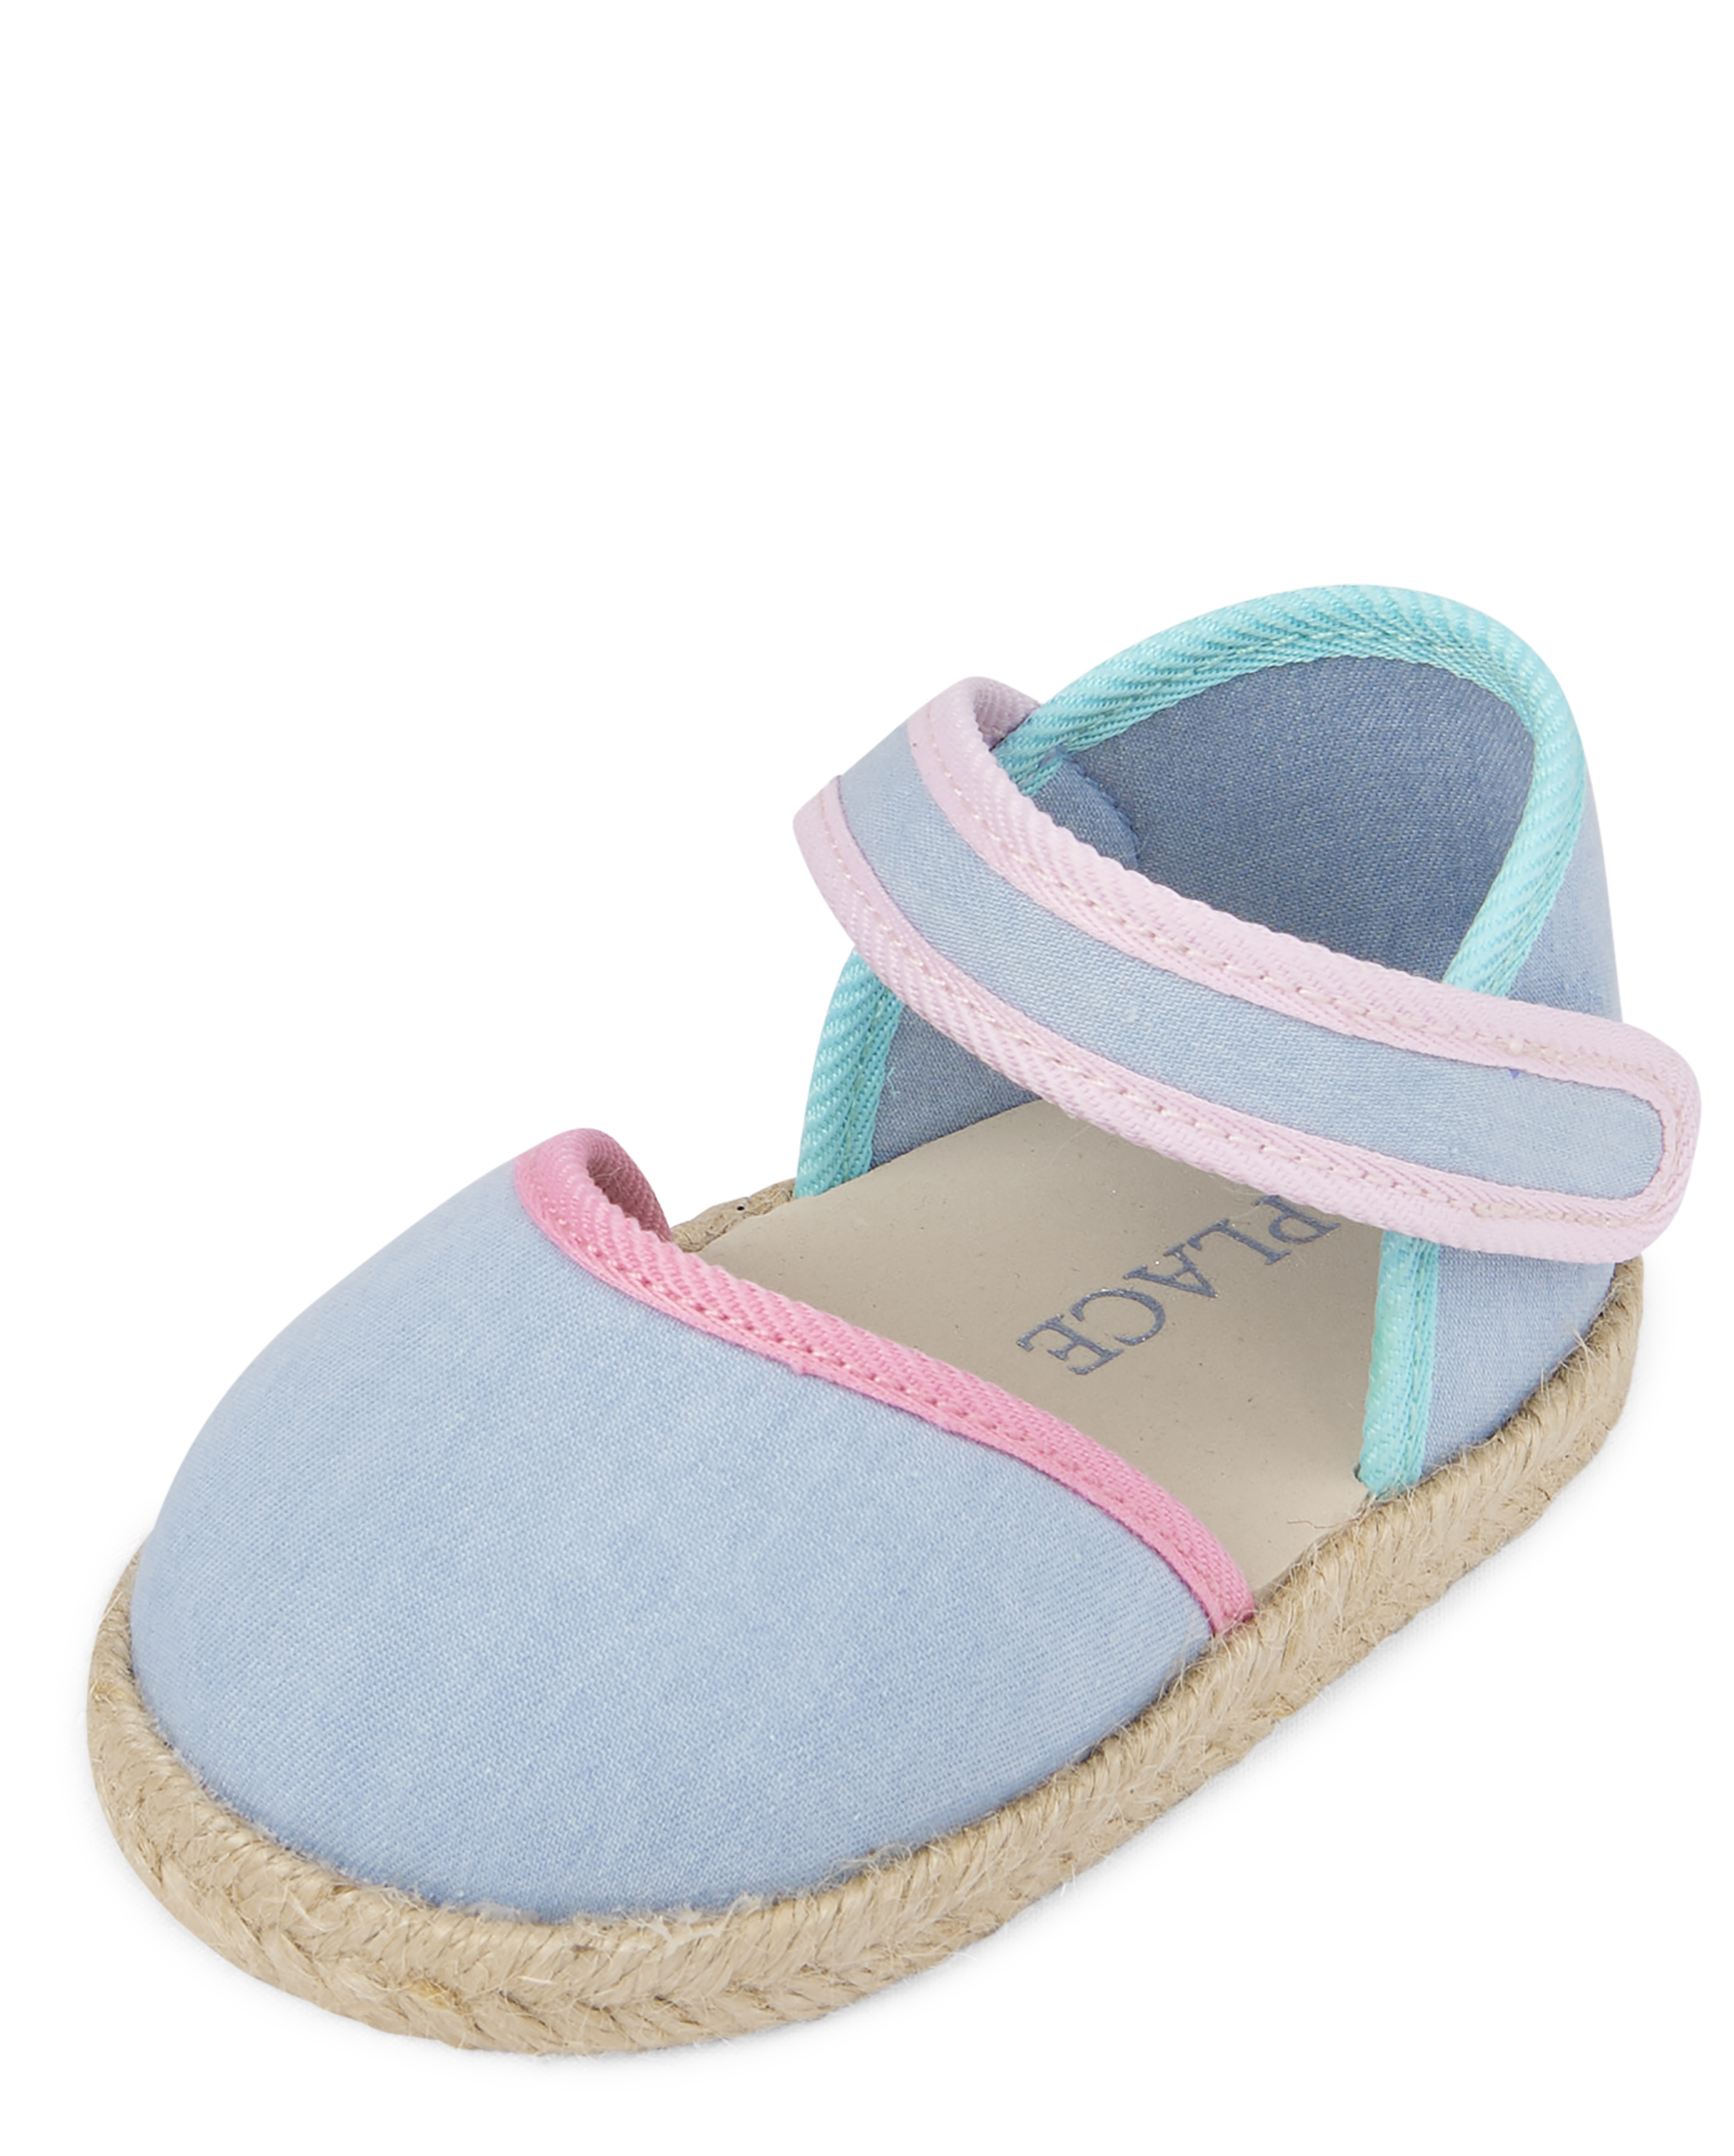 NEXT Baby Girls Pram Shoes Size 1 Age 3 6 Months Pink Sandals Summer Espadrilles 